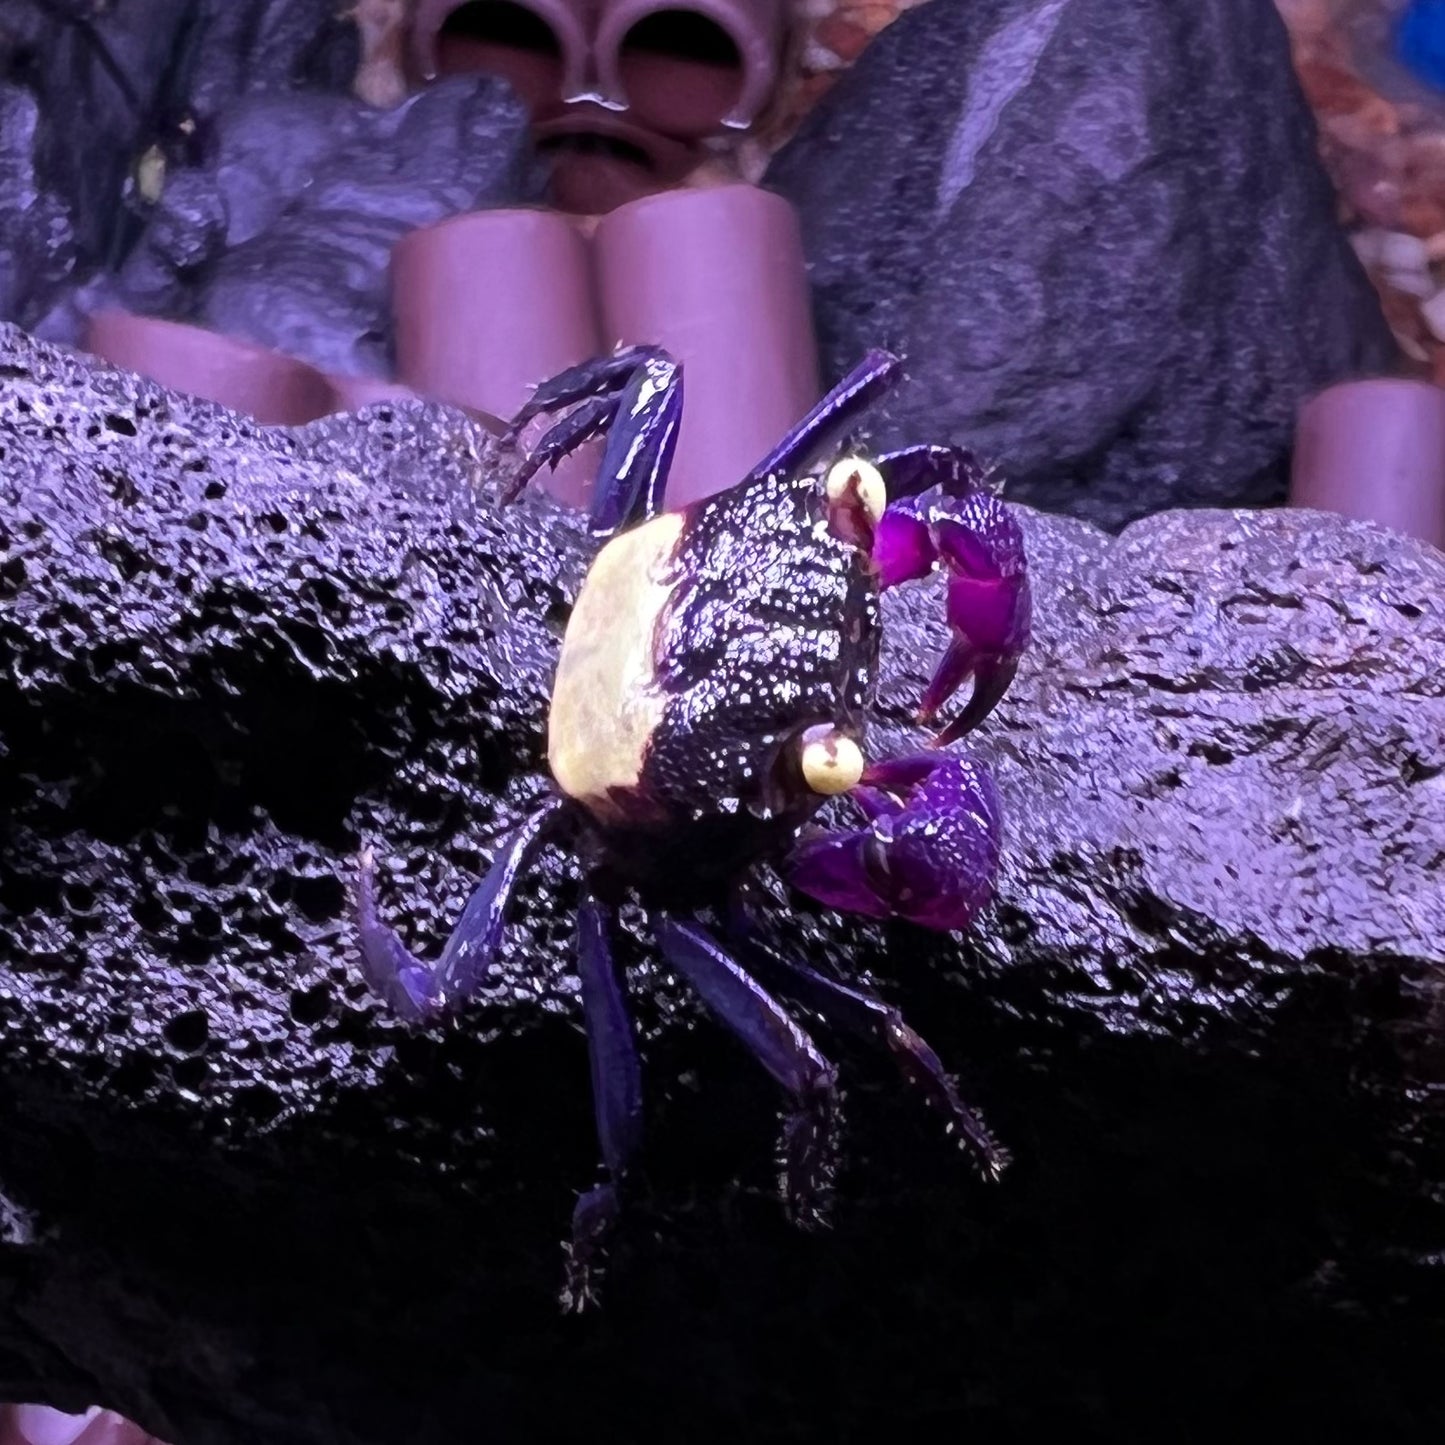 黃眼吸血鬼惡魔蟹 Purple Vampire Crab (Geosesarma dennerle)